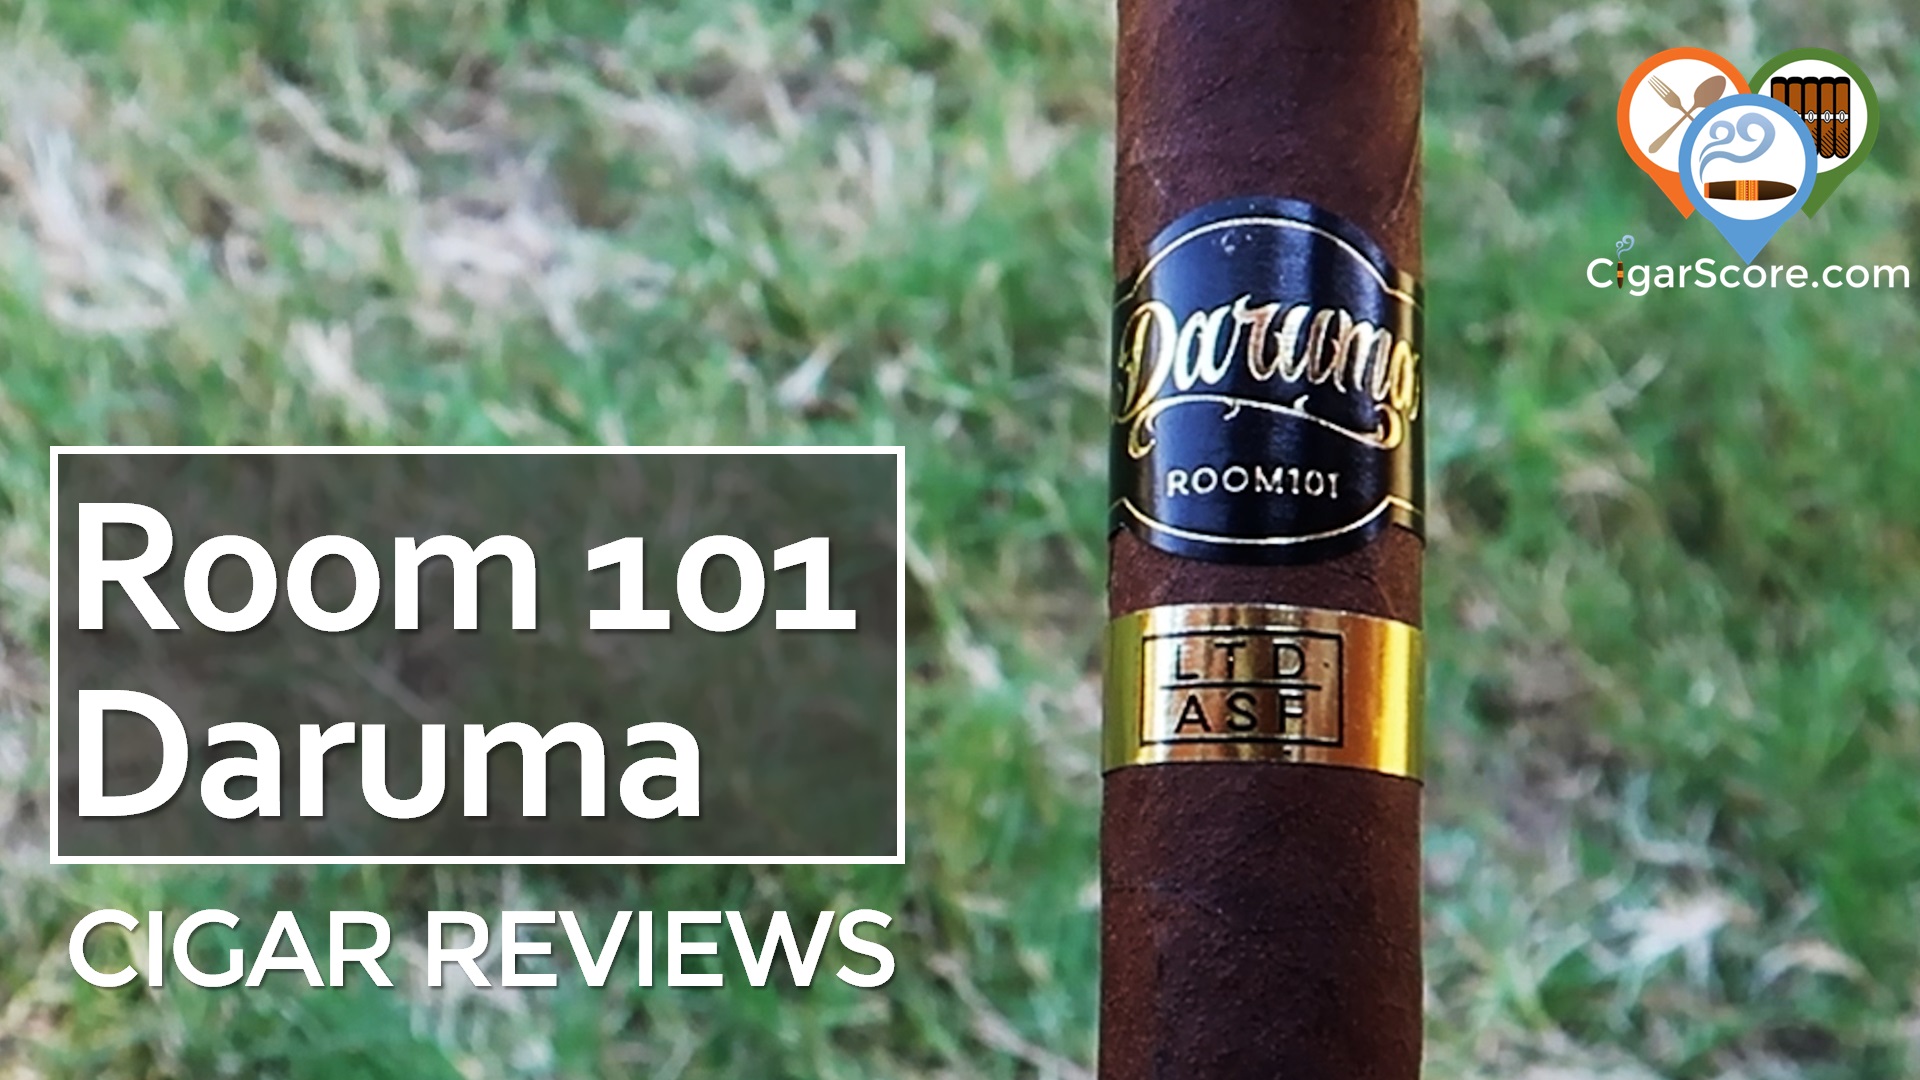 Cigar Review: Room 101 Daruma Toro